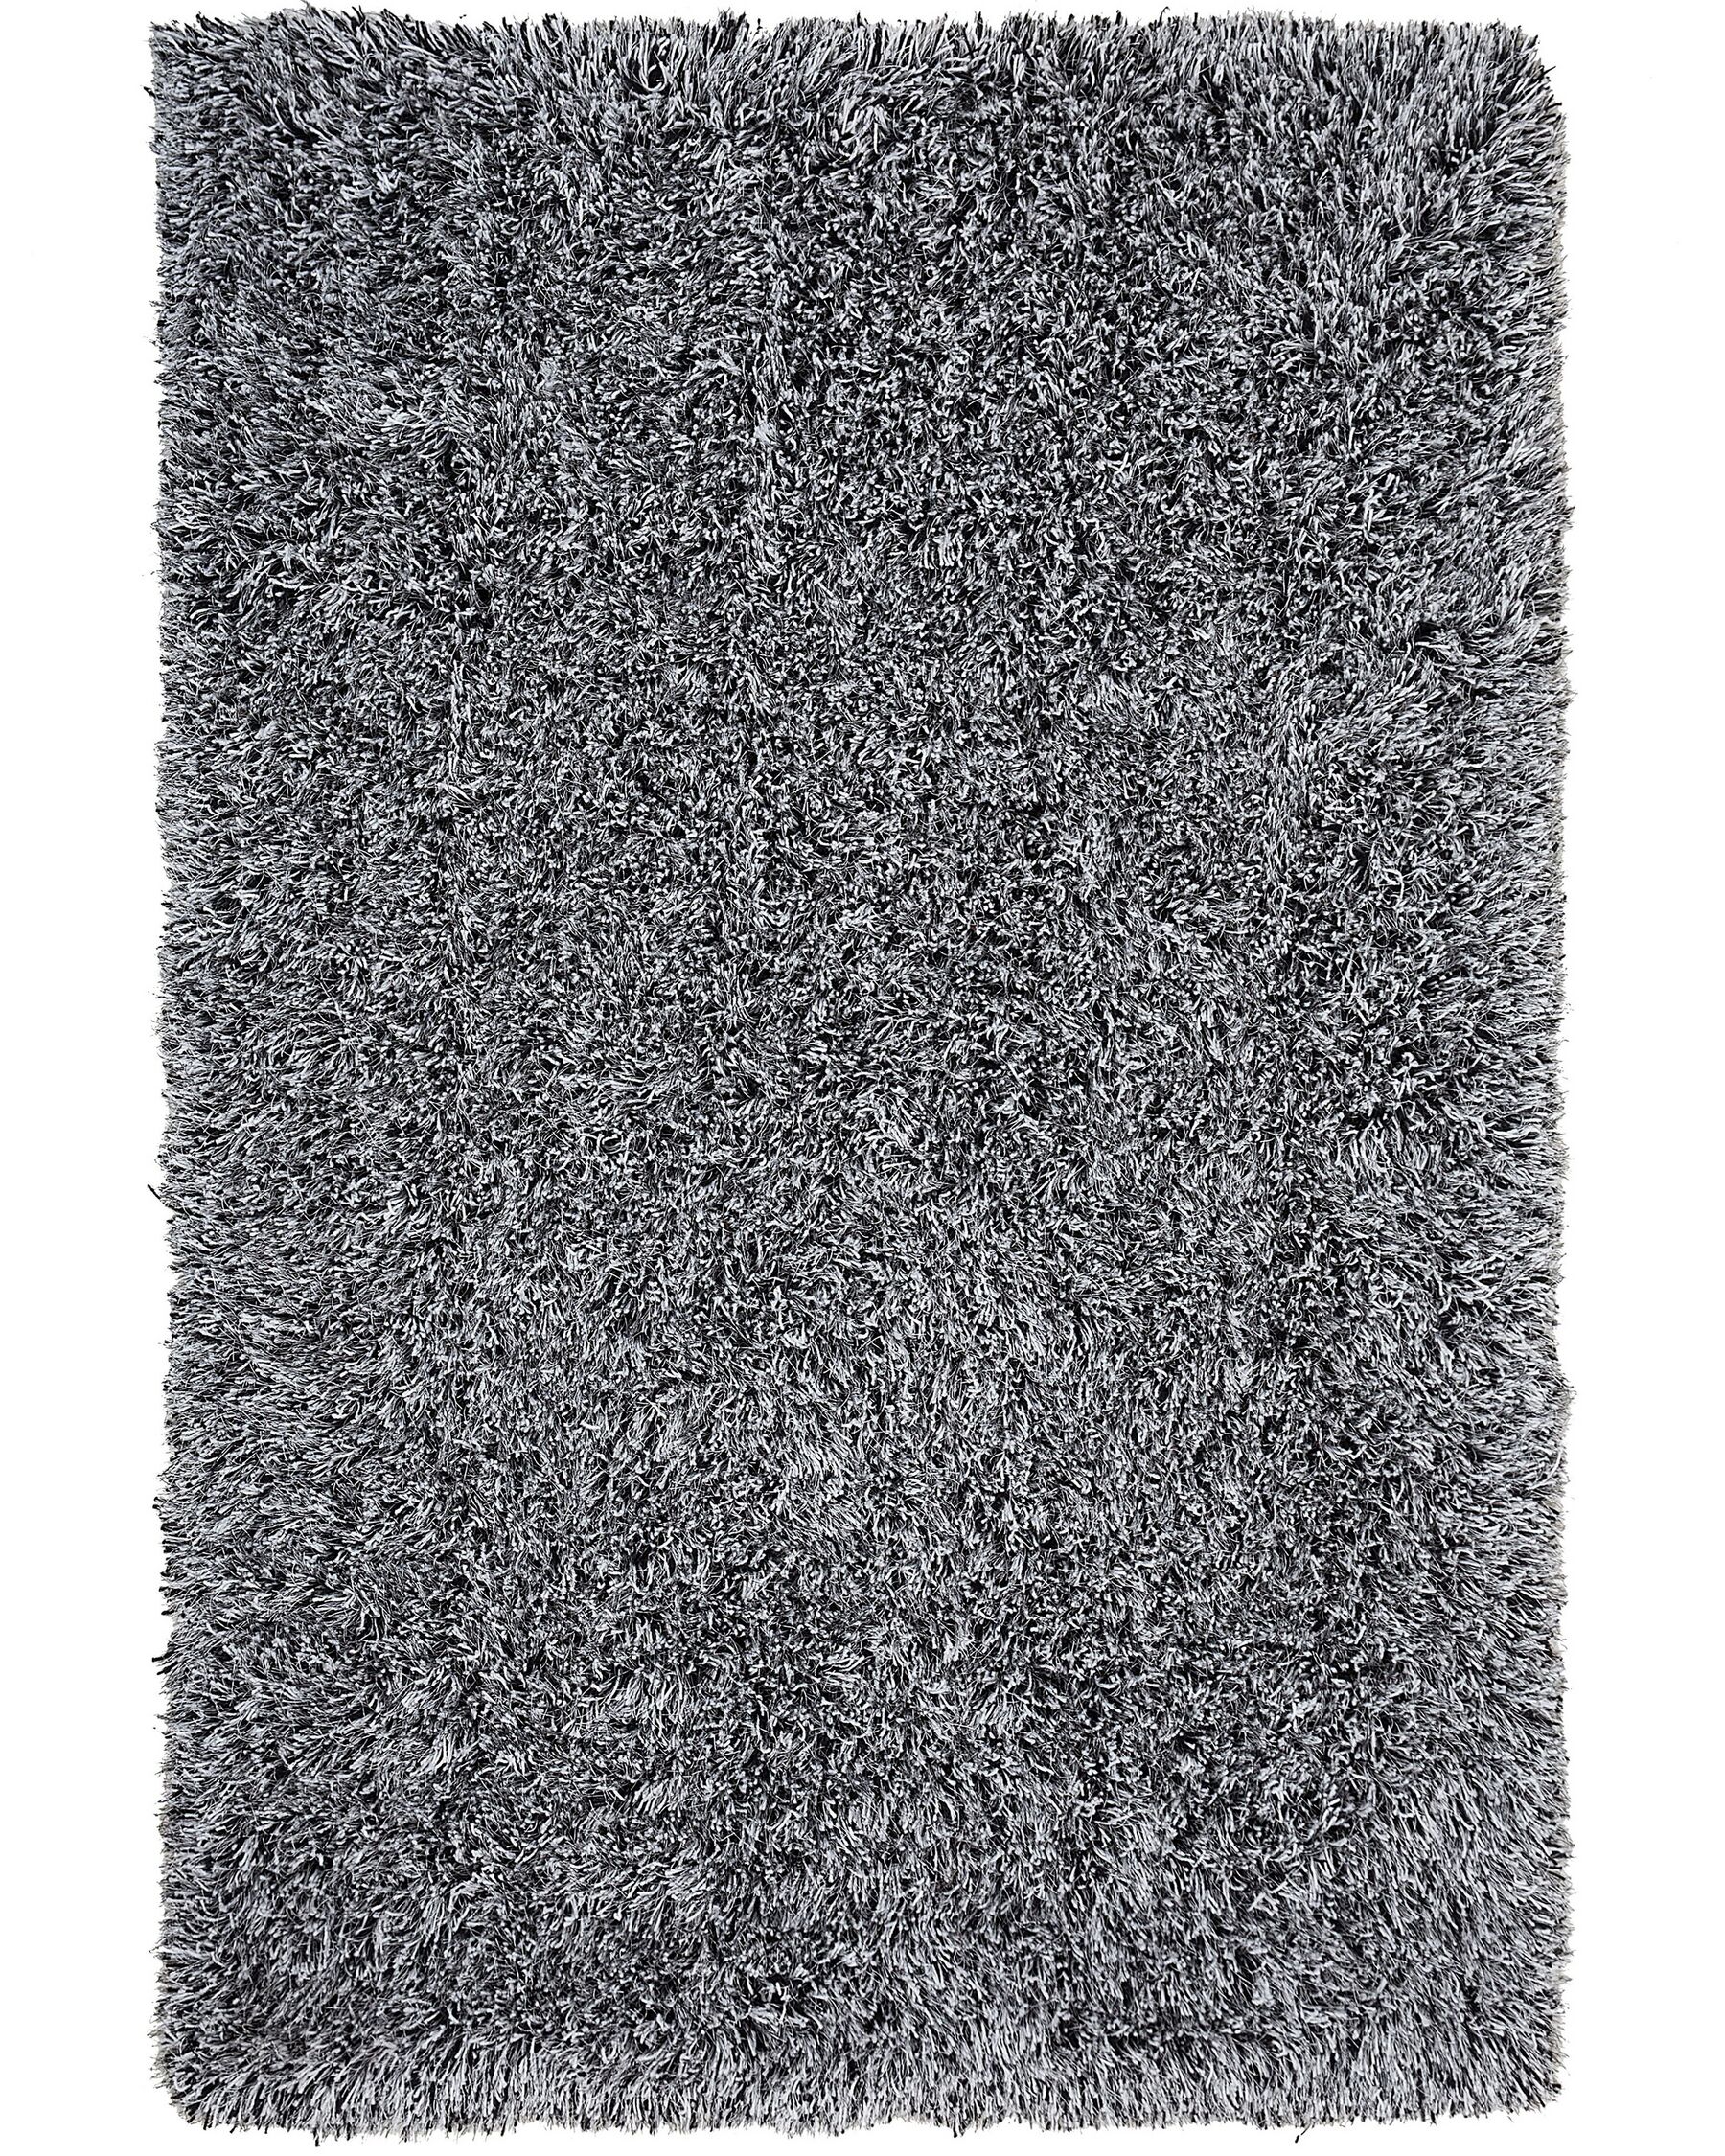 Koberec Shaggy 140 x 200 cm melanž černo-bílý CIDE_746805